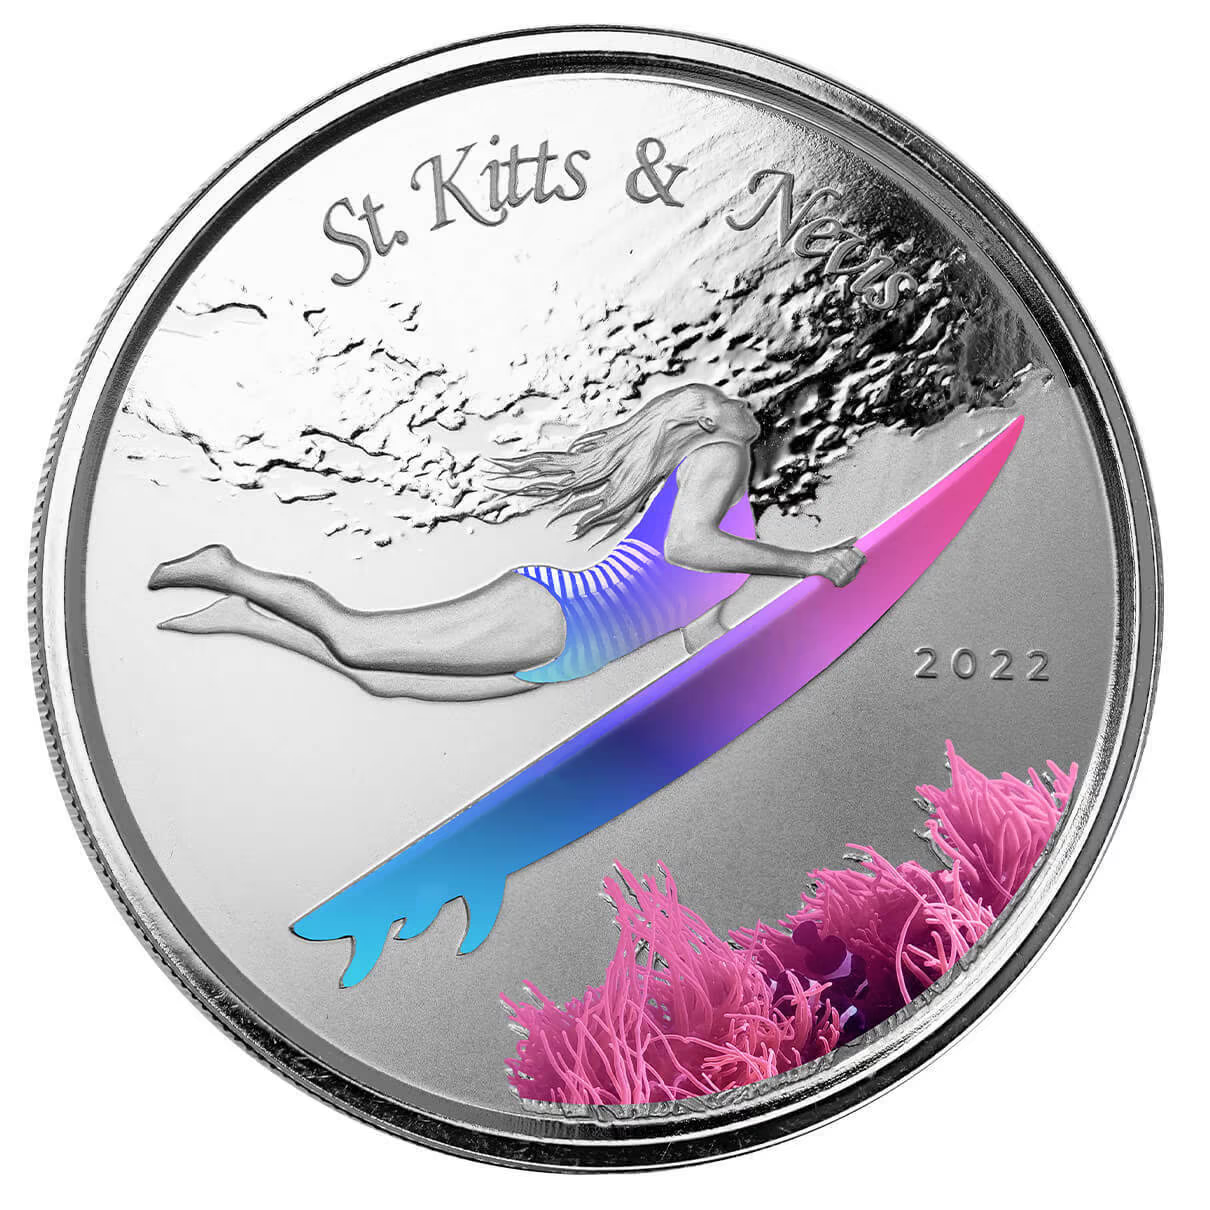 1 Oz Silver Coin 2022 EC8 Saint Kitts & Nevis $2 Color Proof - Underwater Surfer-classypw.com-1